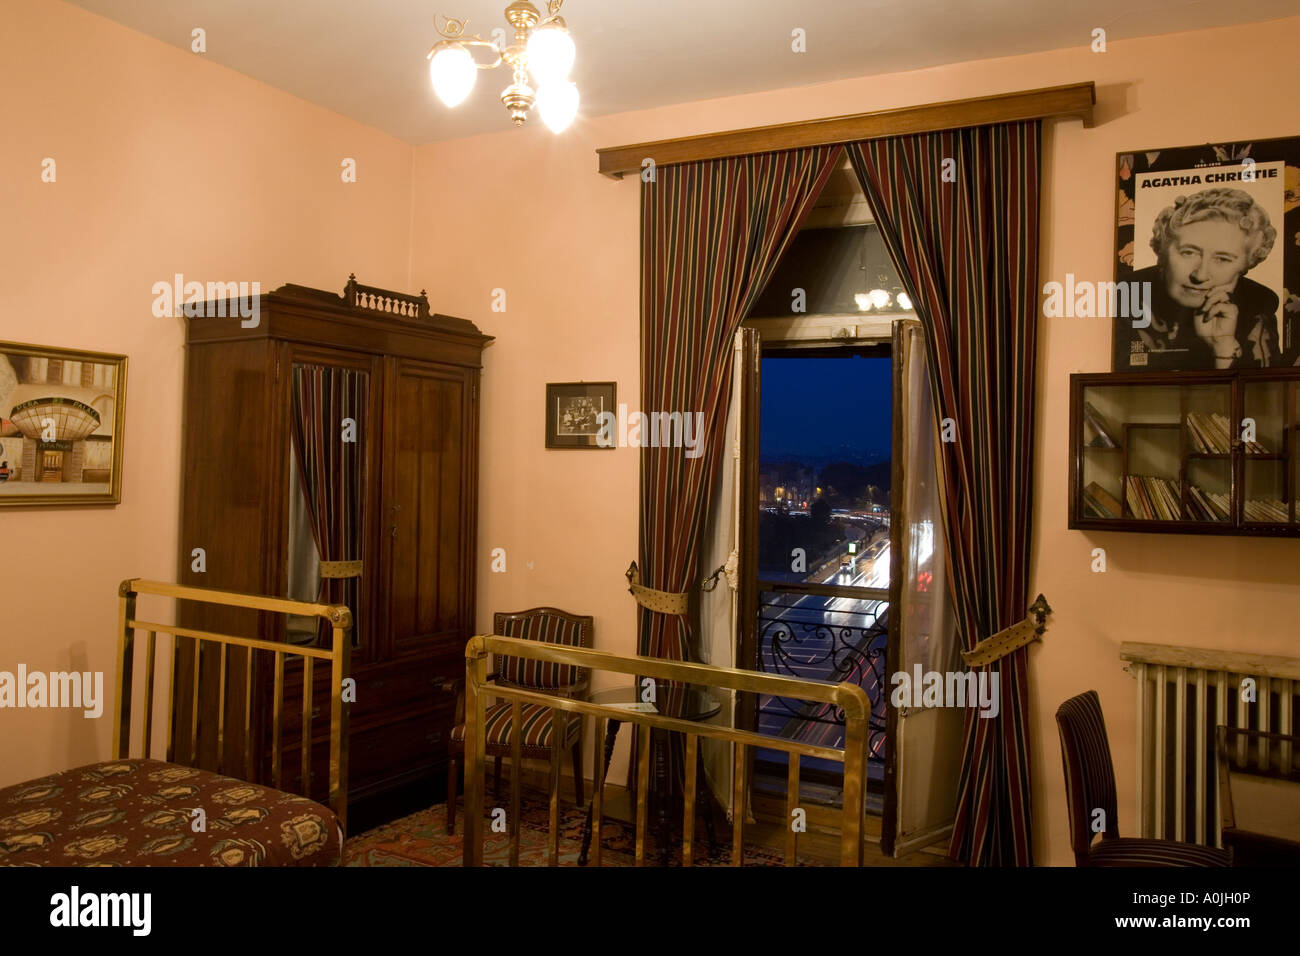 Pera Palas Hotel Istanbul Turkey Room 411 where Agatha Christie stayed Stock Photo